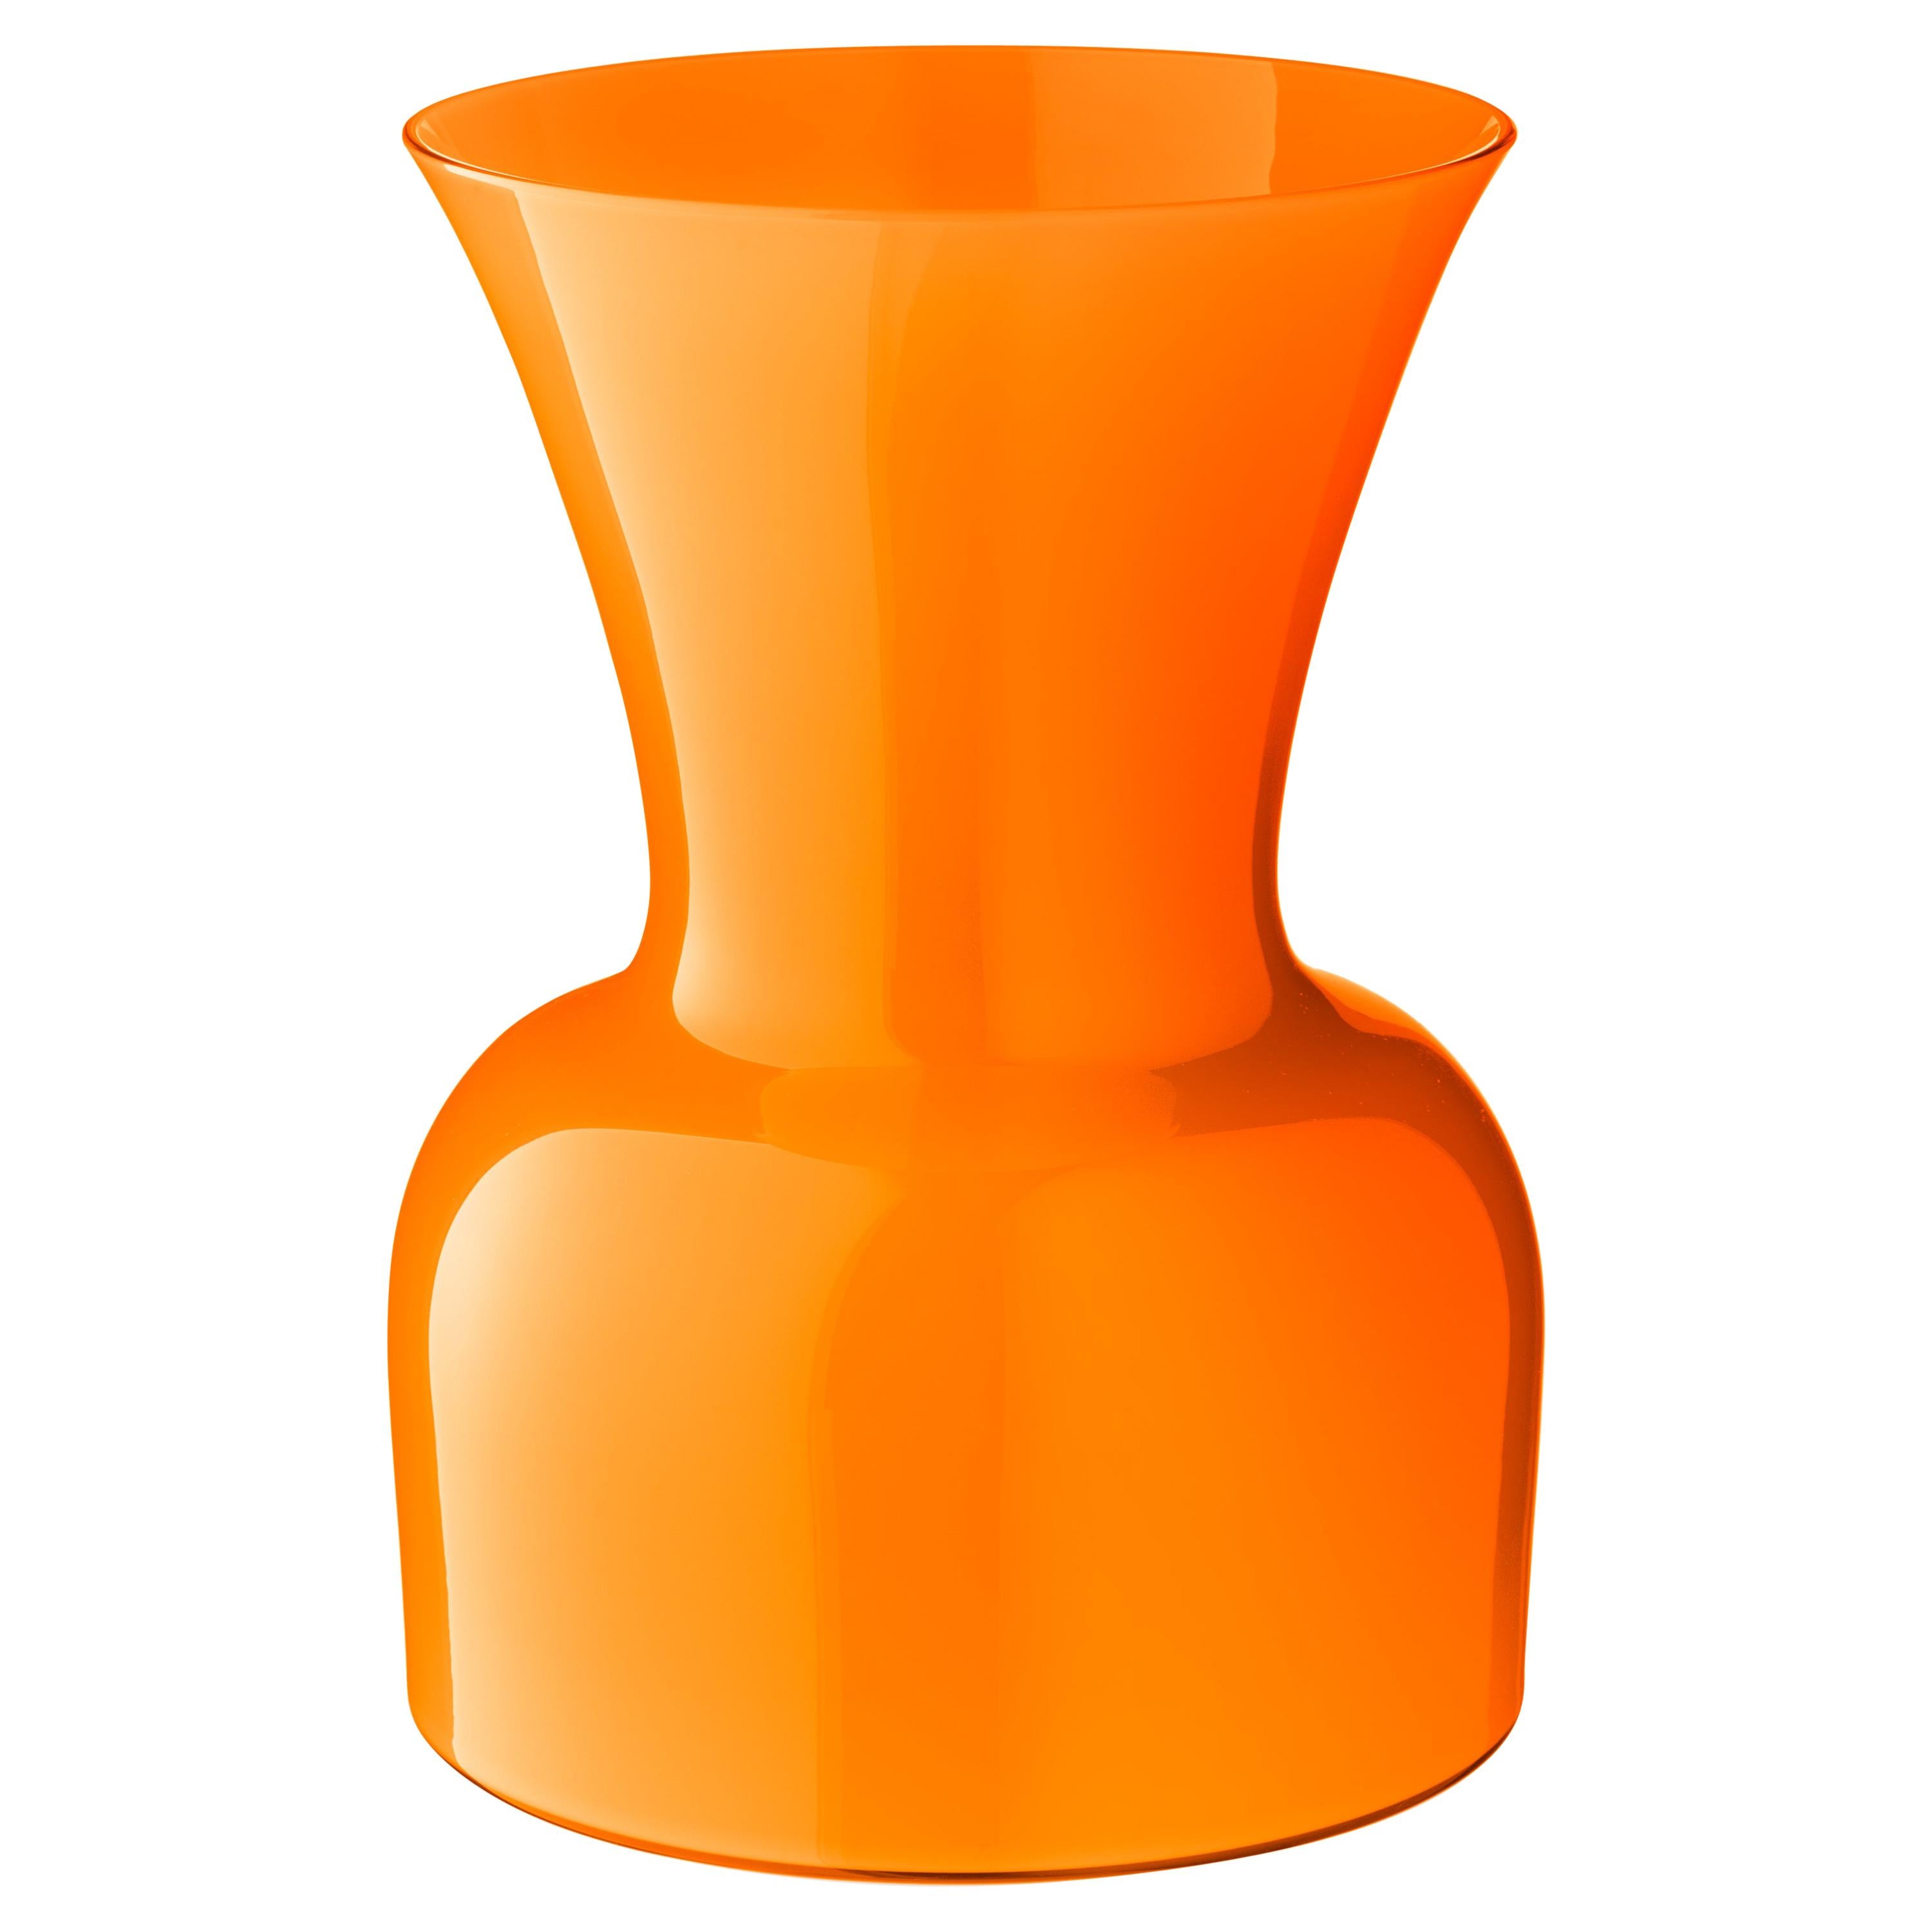 Orange (10074) Large Profili Daisy Murano Glass Vase by Anna Gili